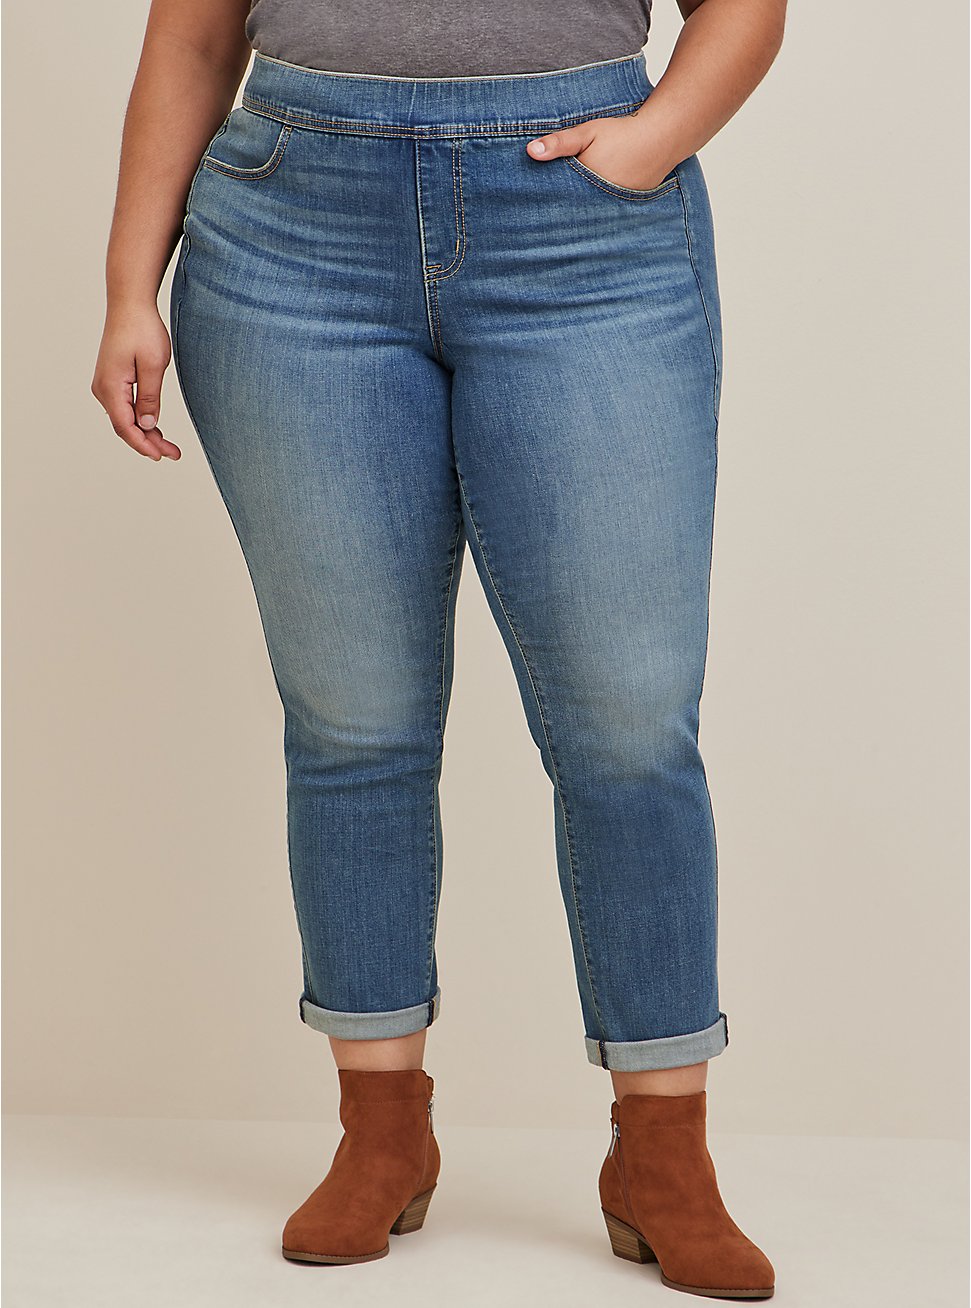 Plus Size High-Rise Lean Jean - Super Soft Denim, , hi-res